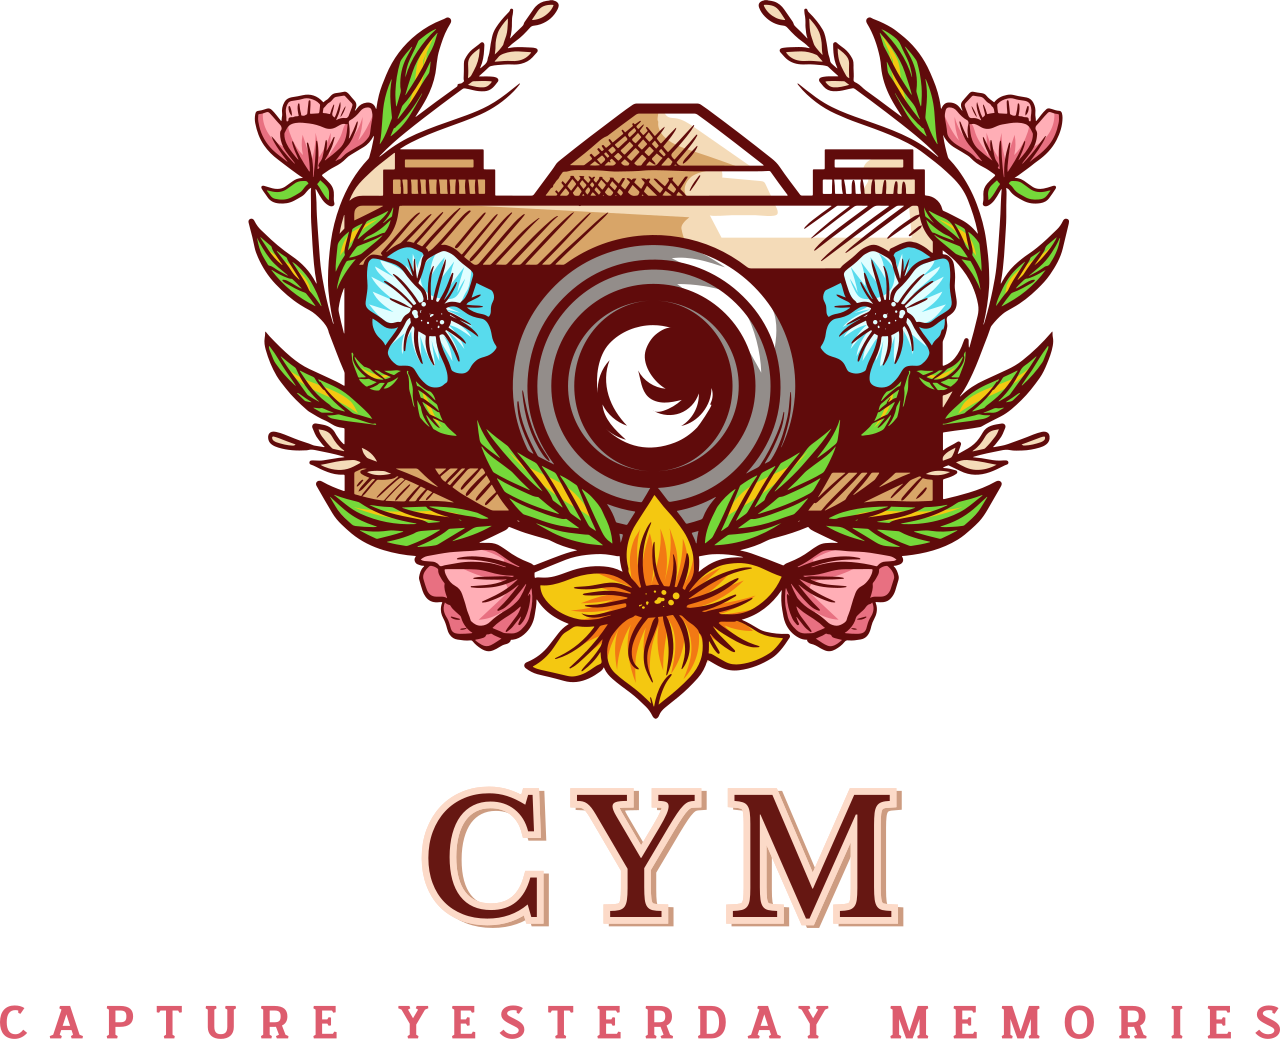 CYM's logo